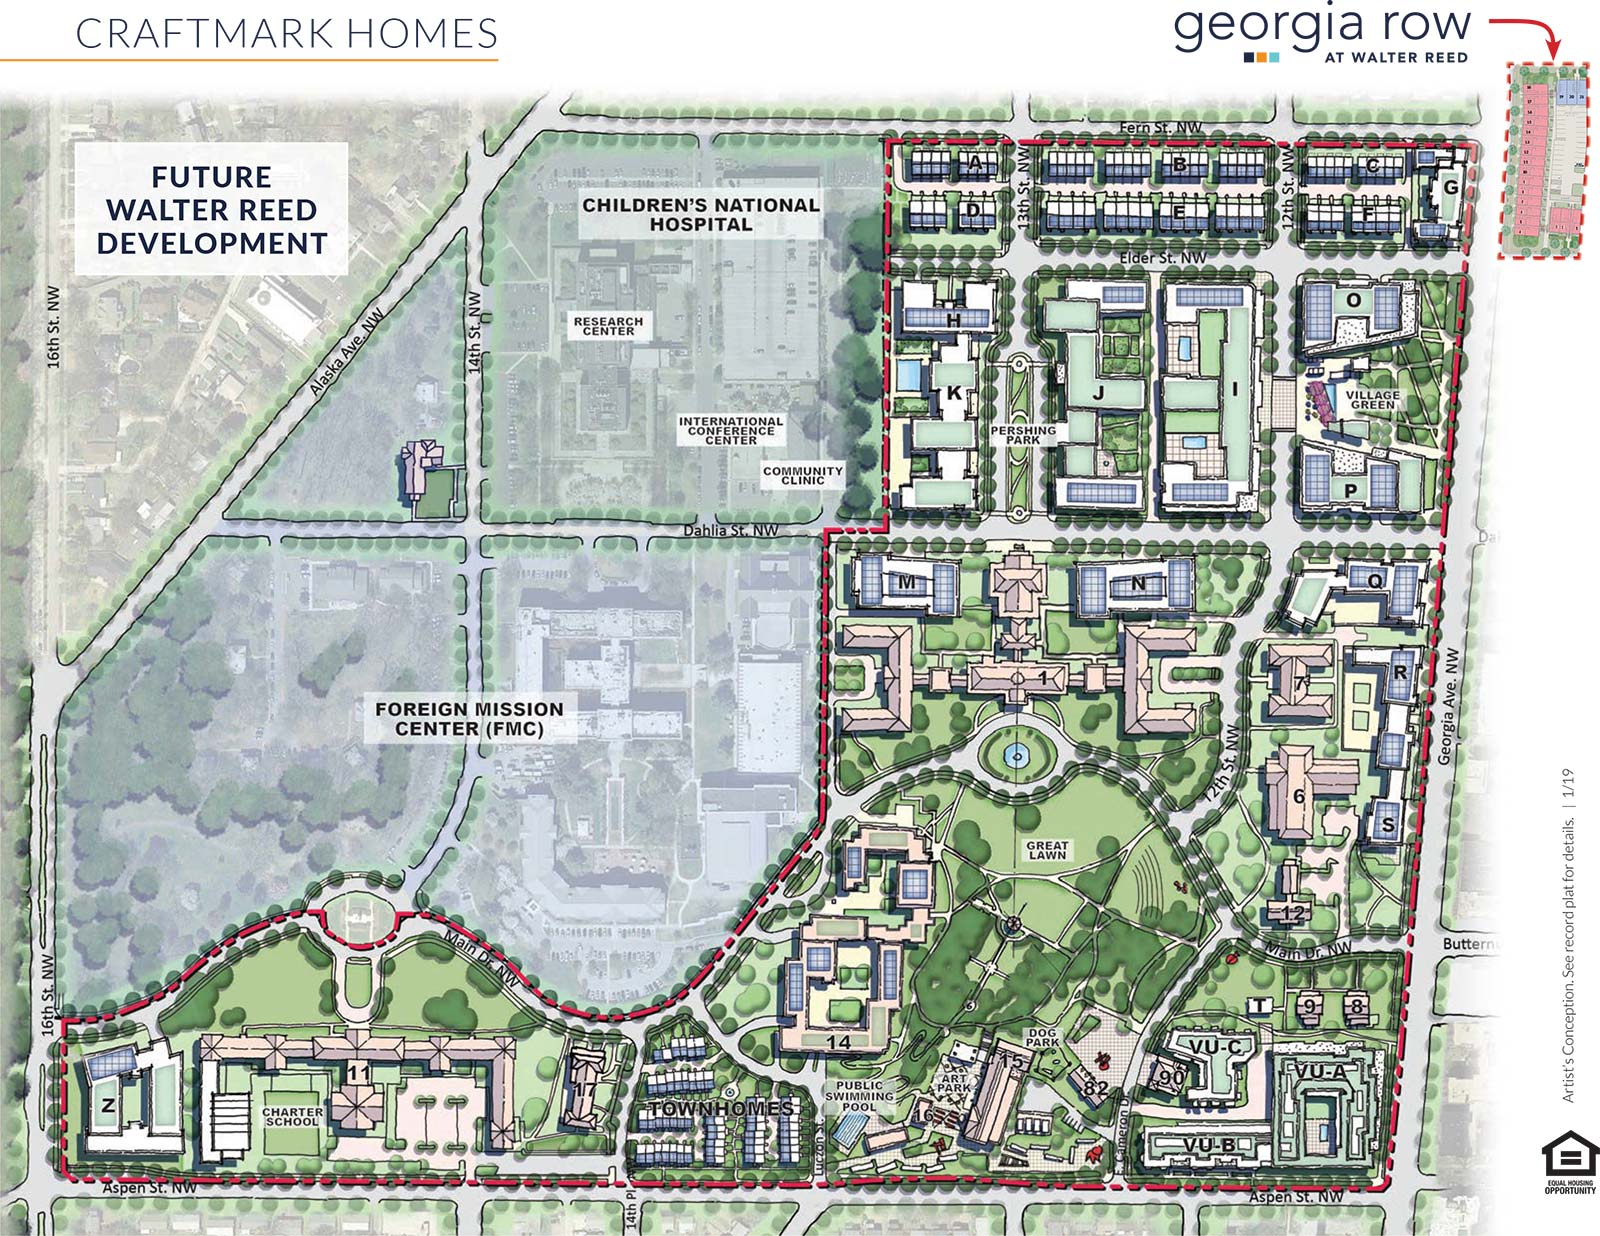 Georgia Row Site Plan, Urban Condos in DC, Craftmark Homes